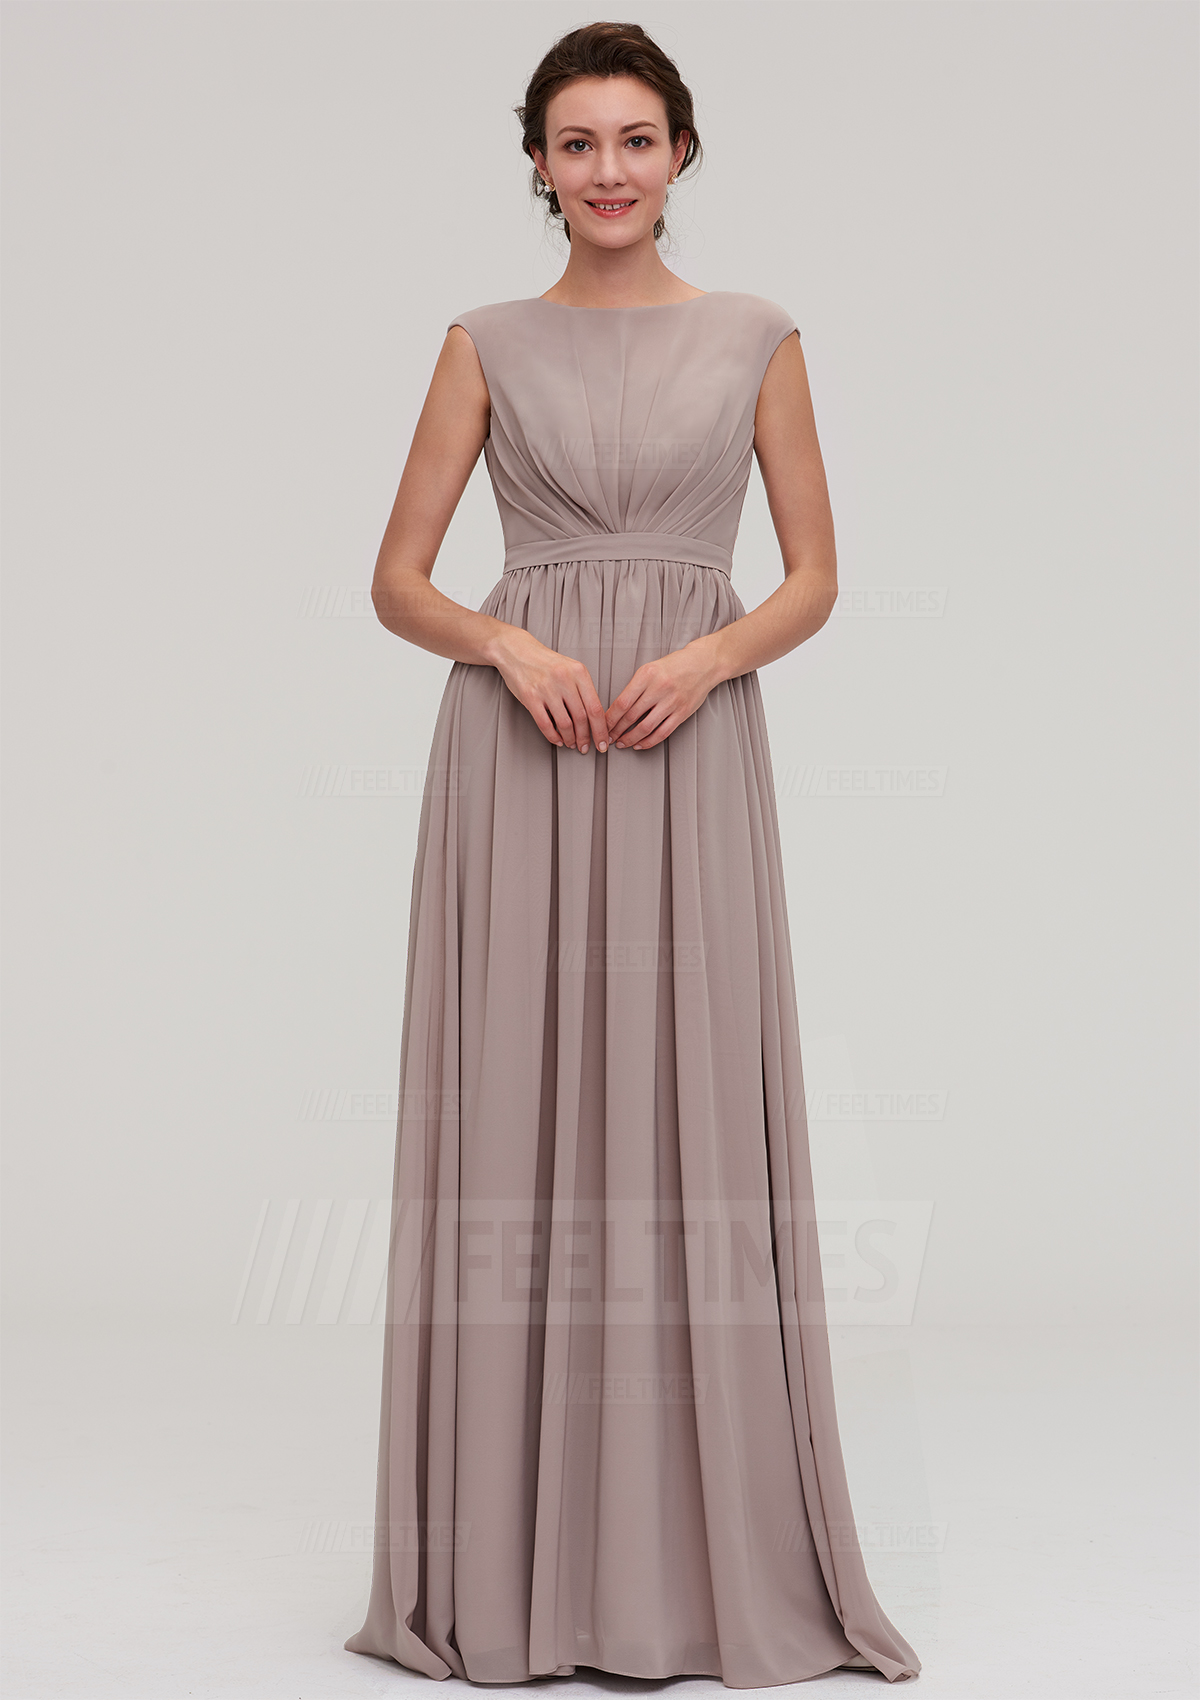 A-Line/Princess Bateau Sleeveless Long/Floor-Length Chiffon Bridesmaid Dress With Pleated
